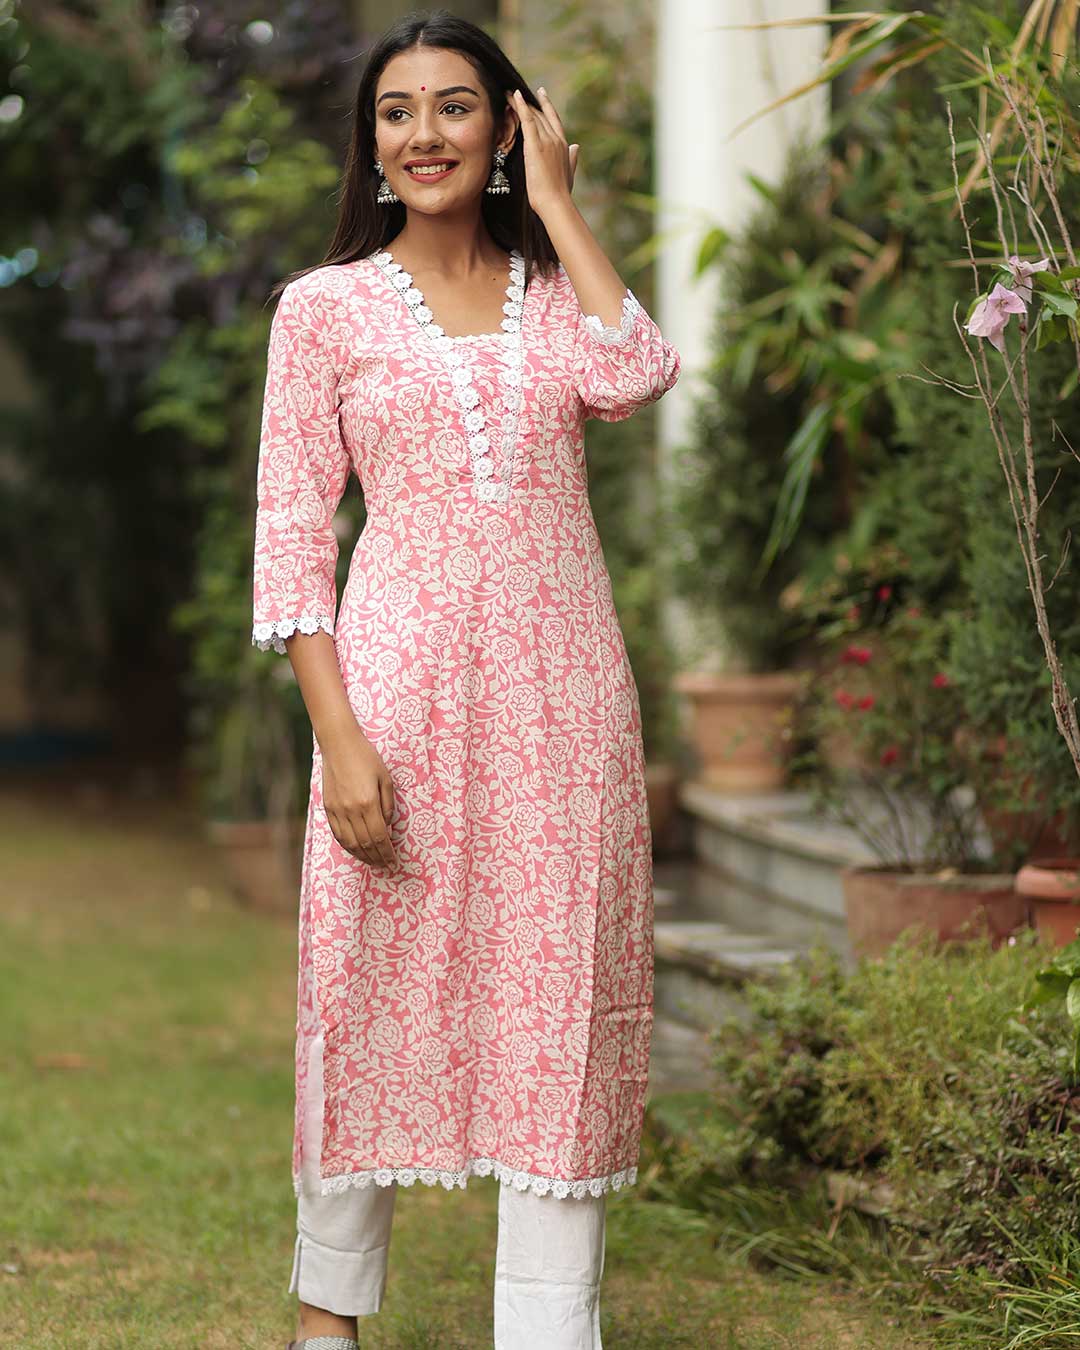 Ankita Fashion Nayra Vol 1 Styles Festive Wear Long Kurti Plazo Collection